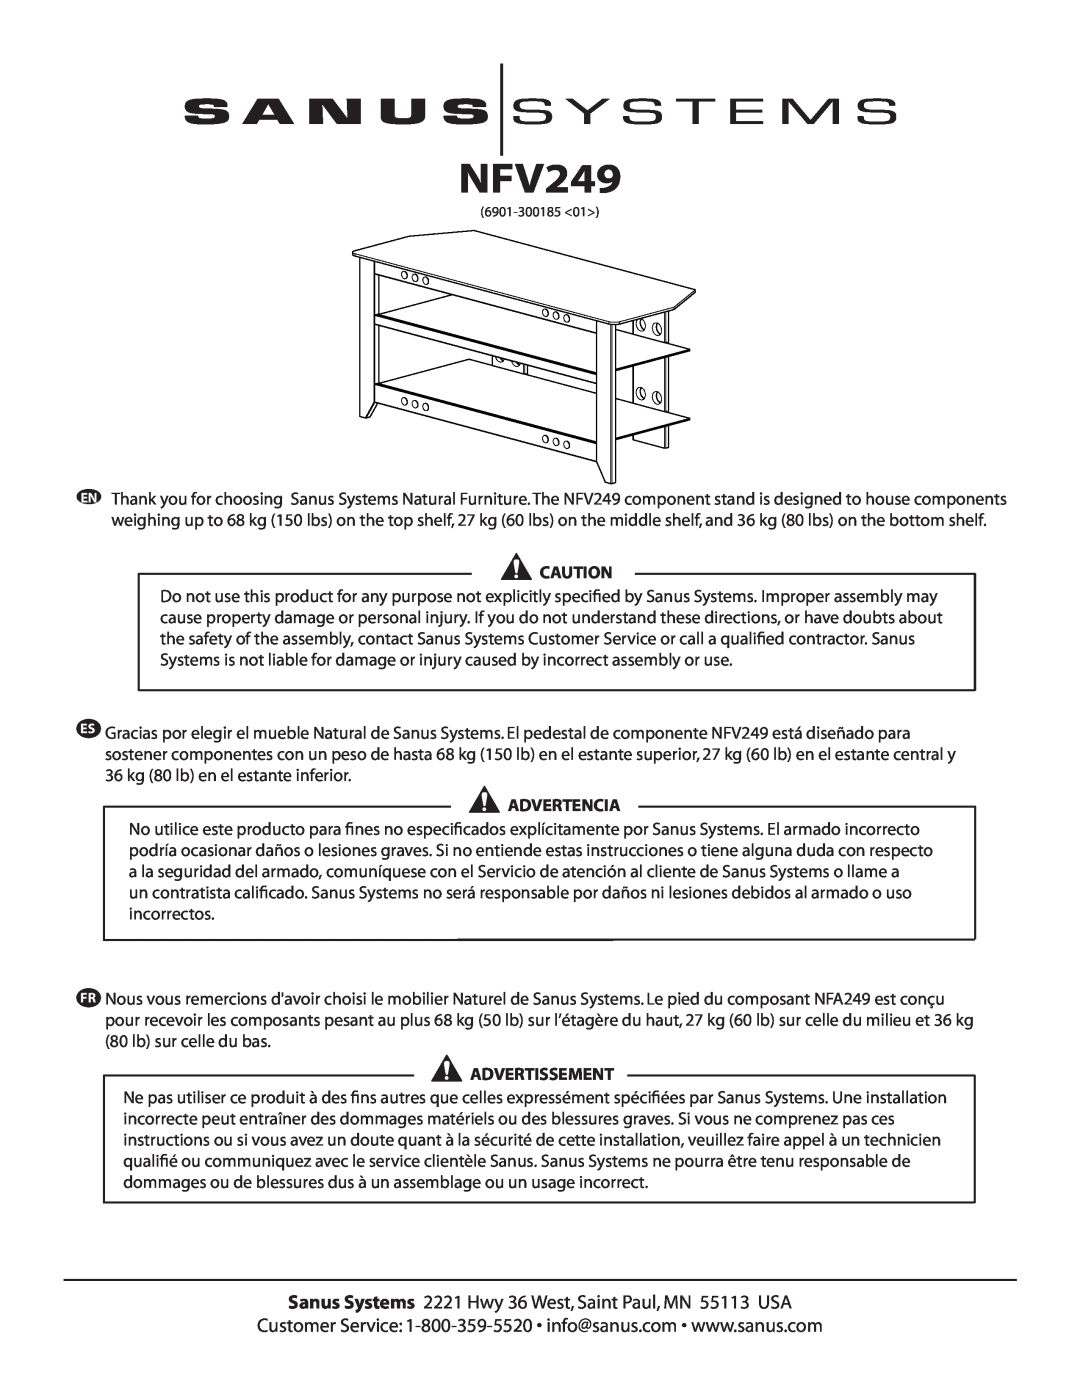 Sanus Systems NFV249 manual Advertencia, Advertissement 